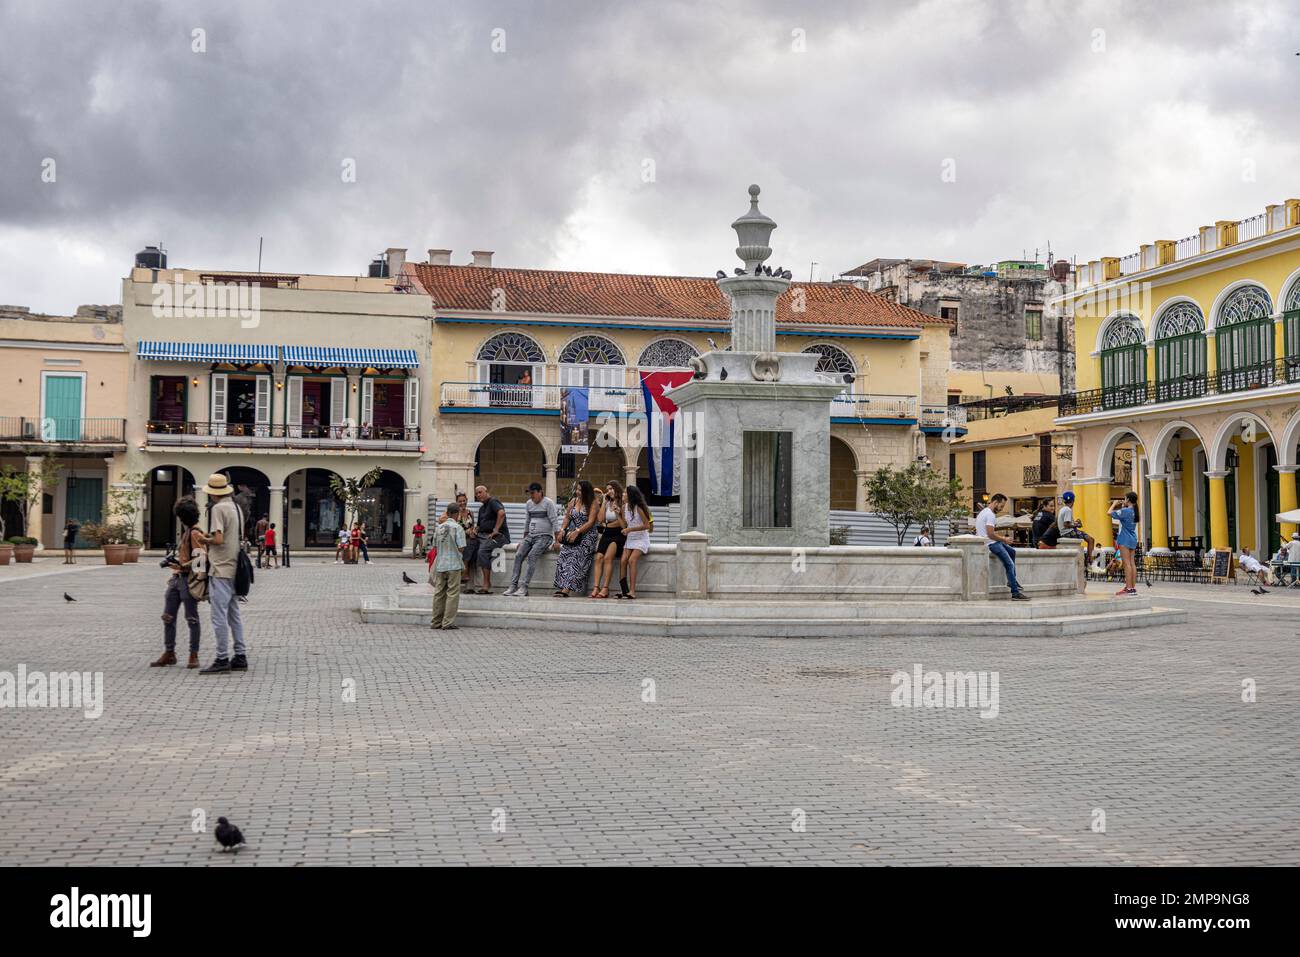 The Fountain, Old Square, Old Havana, Havana, Cuba Stock Photo